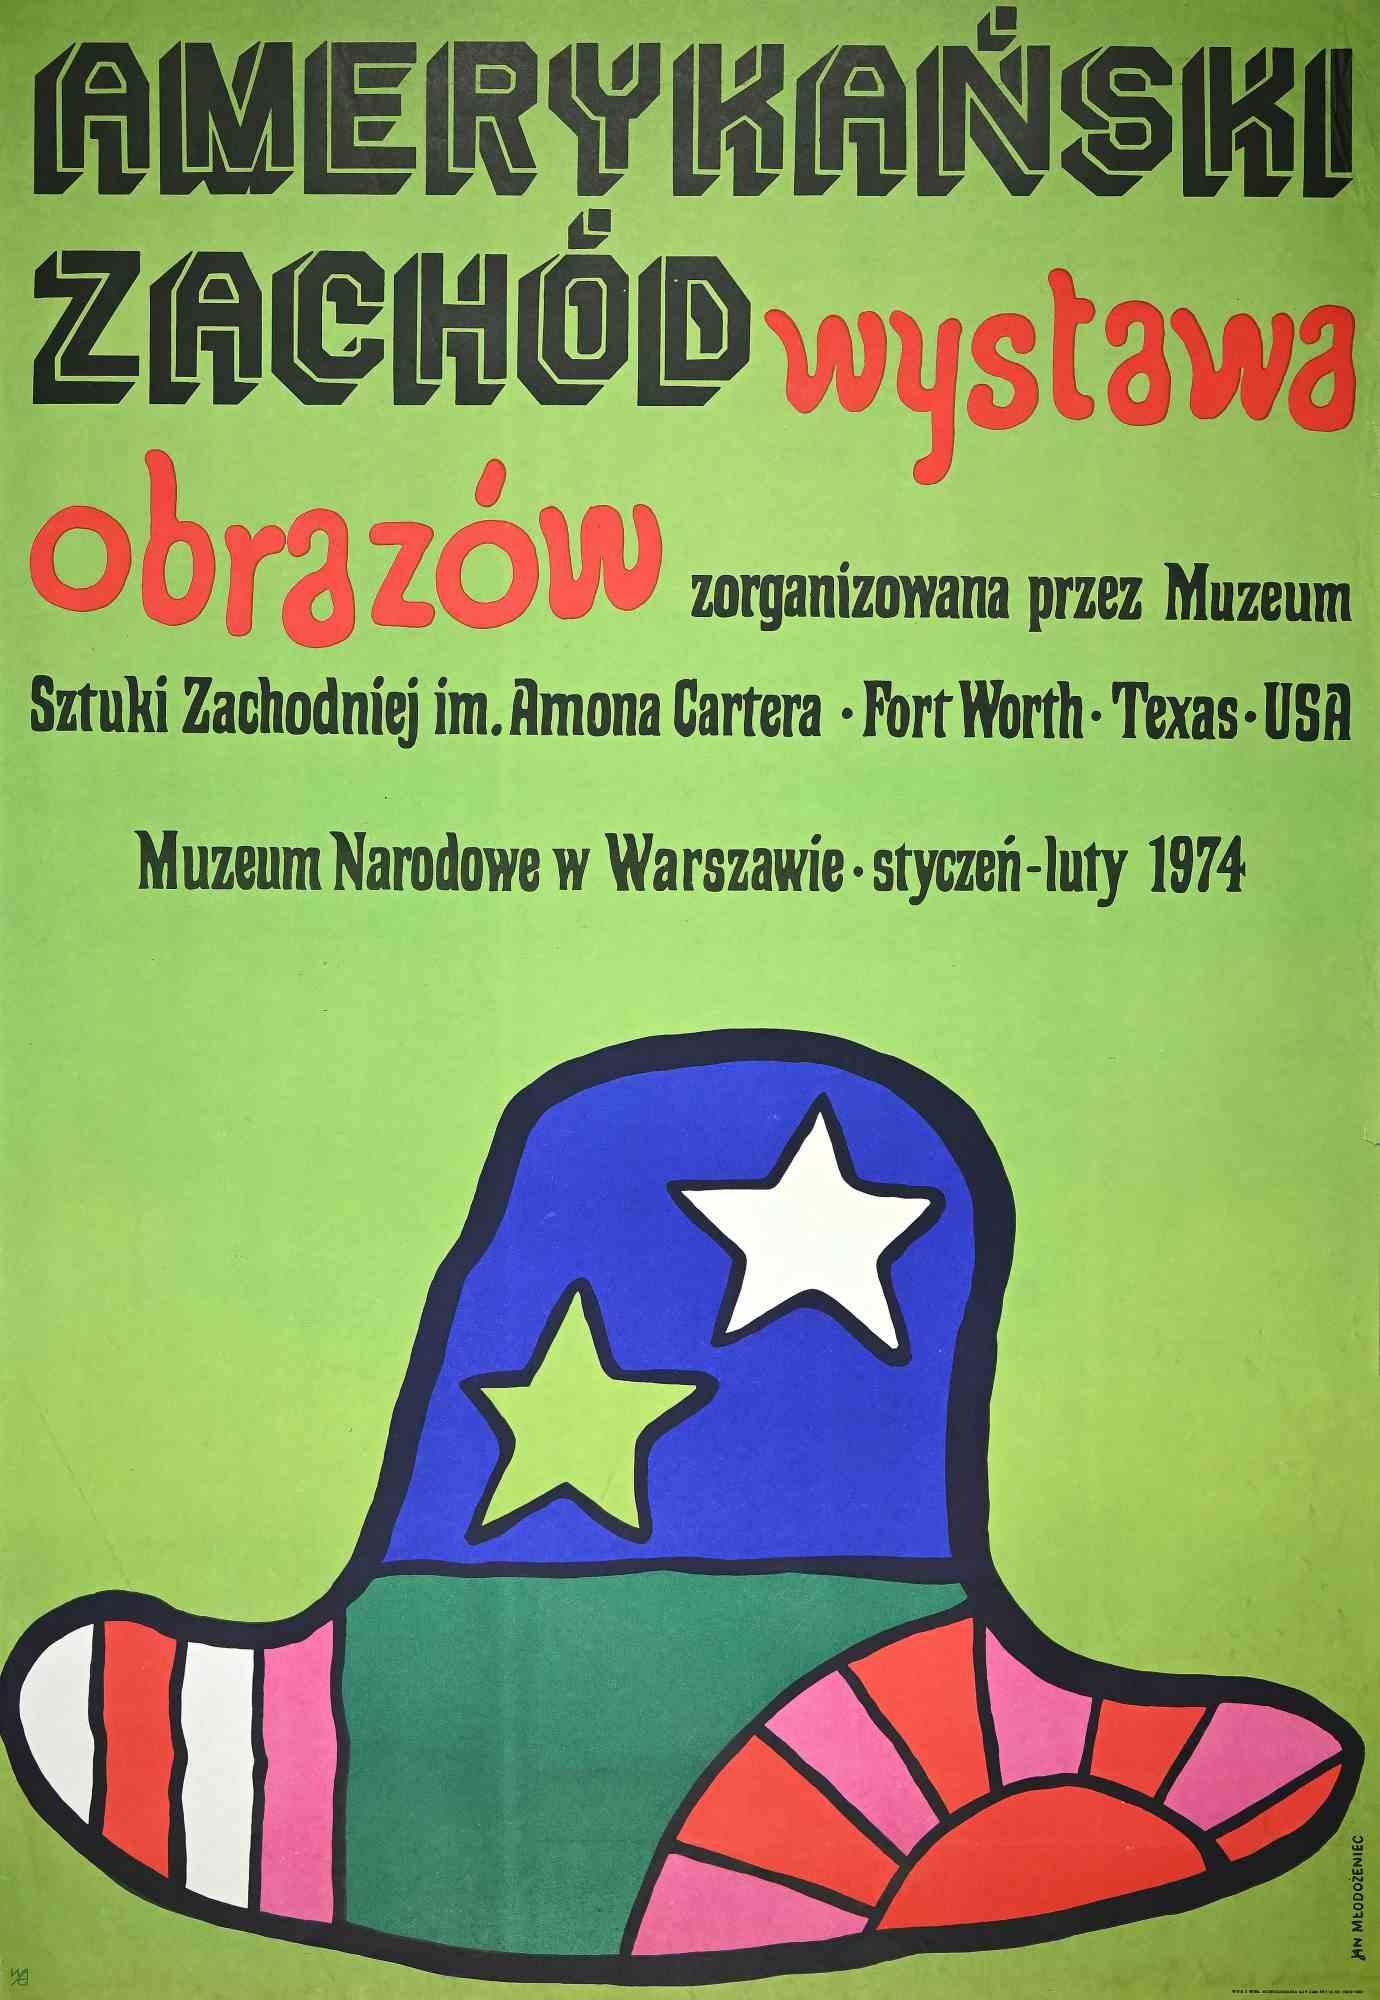 Naradowe Museum in Warsaw - Vintage Poster by Jan Mlodozeniec - 1970